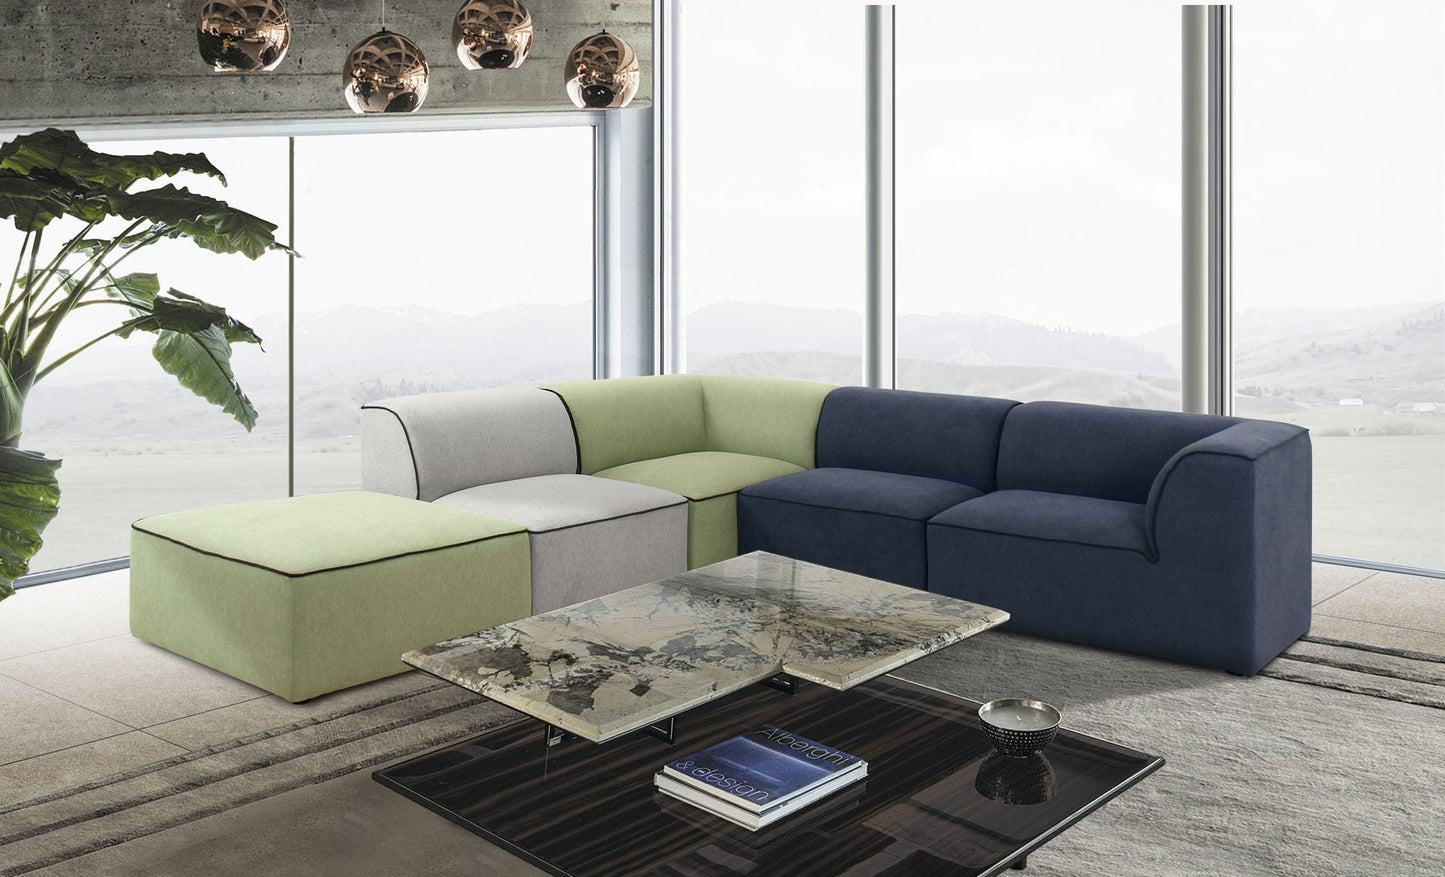 VIG Furniture Divani Casa Polo Green Blue Grey Fabric Modular Sectional Sofa